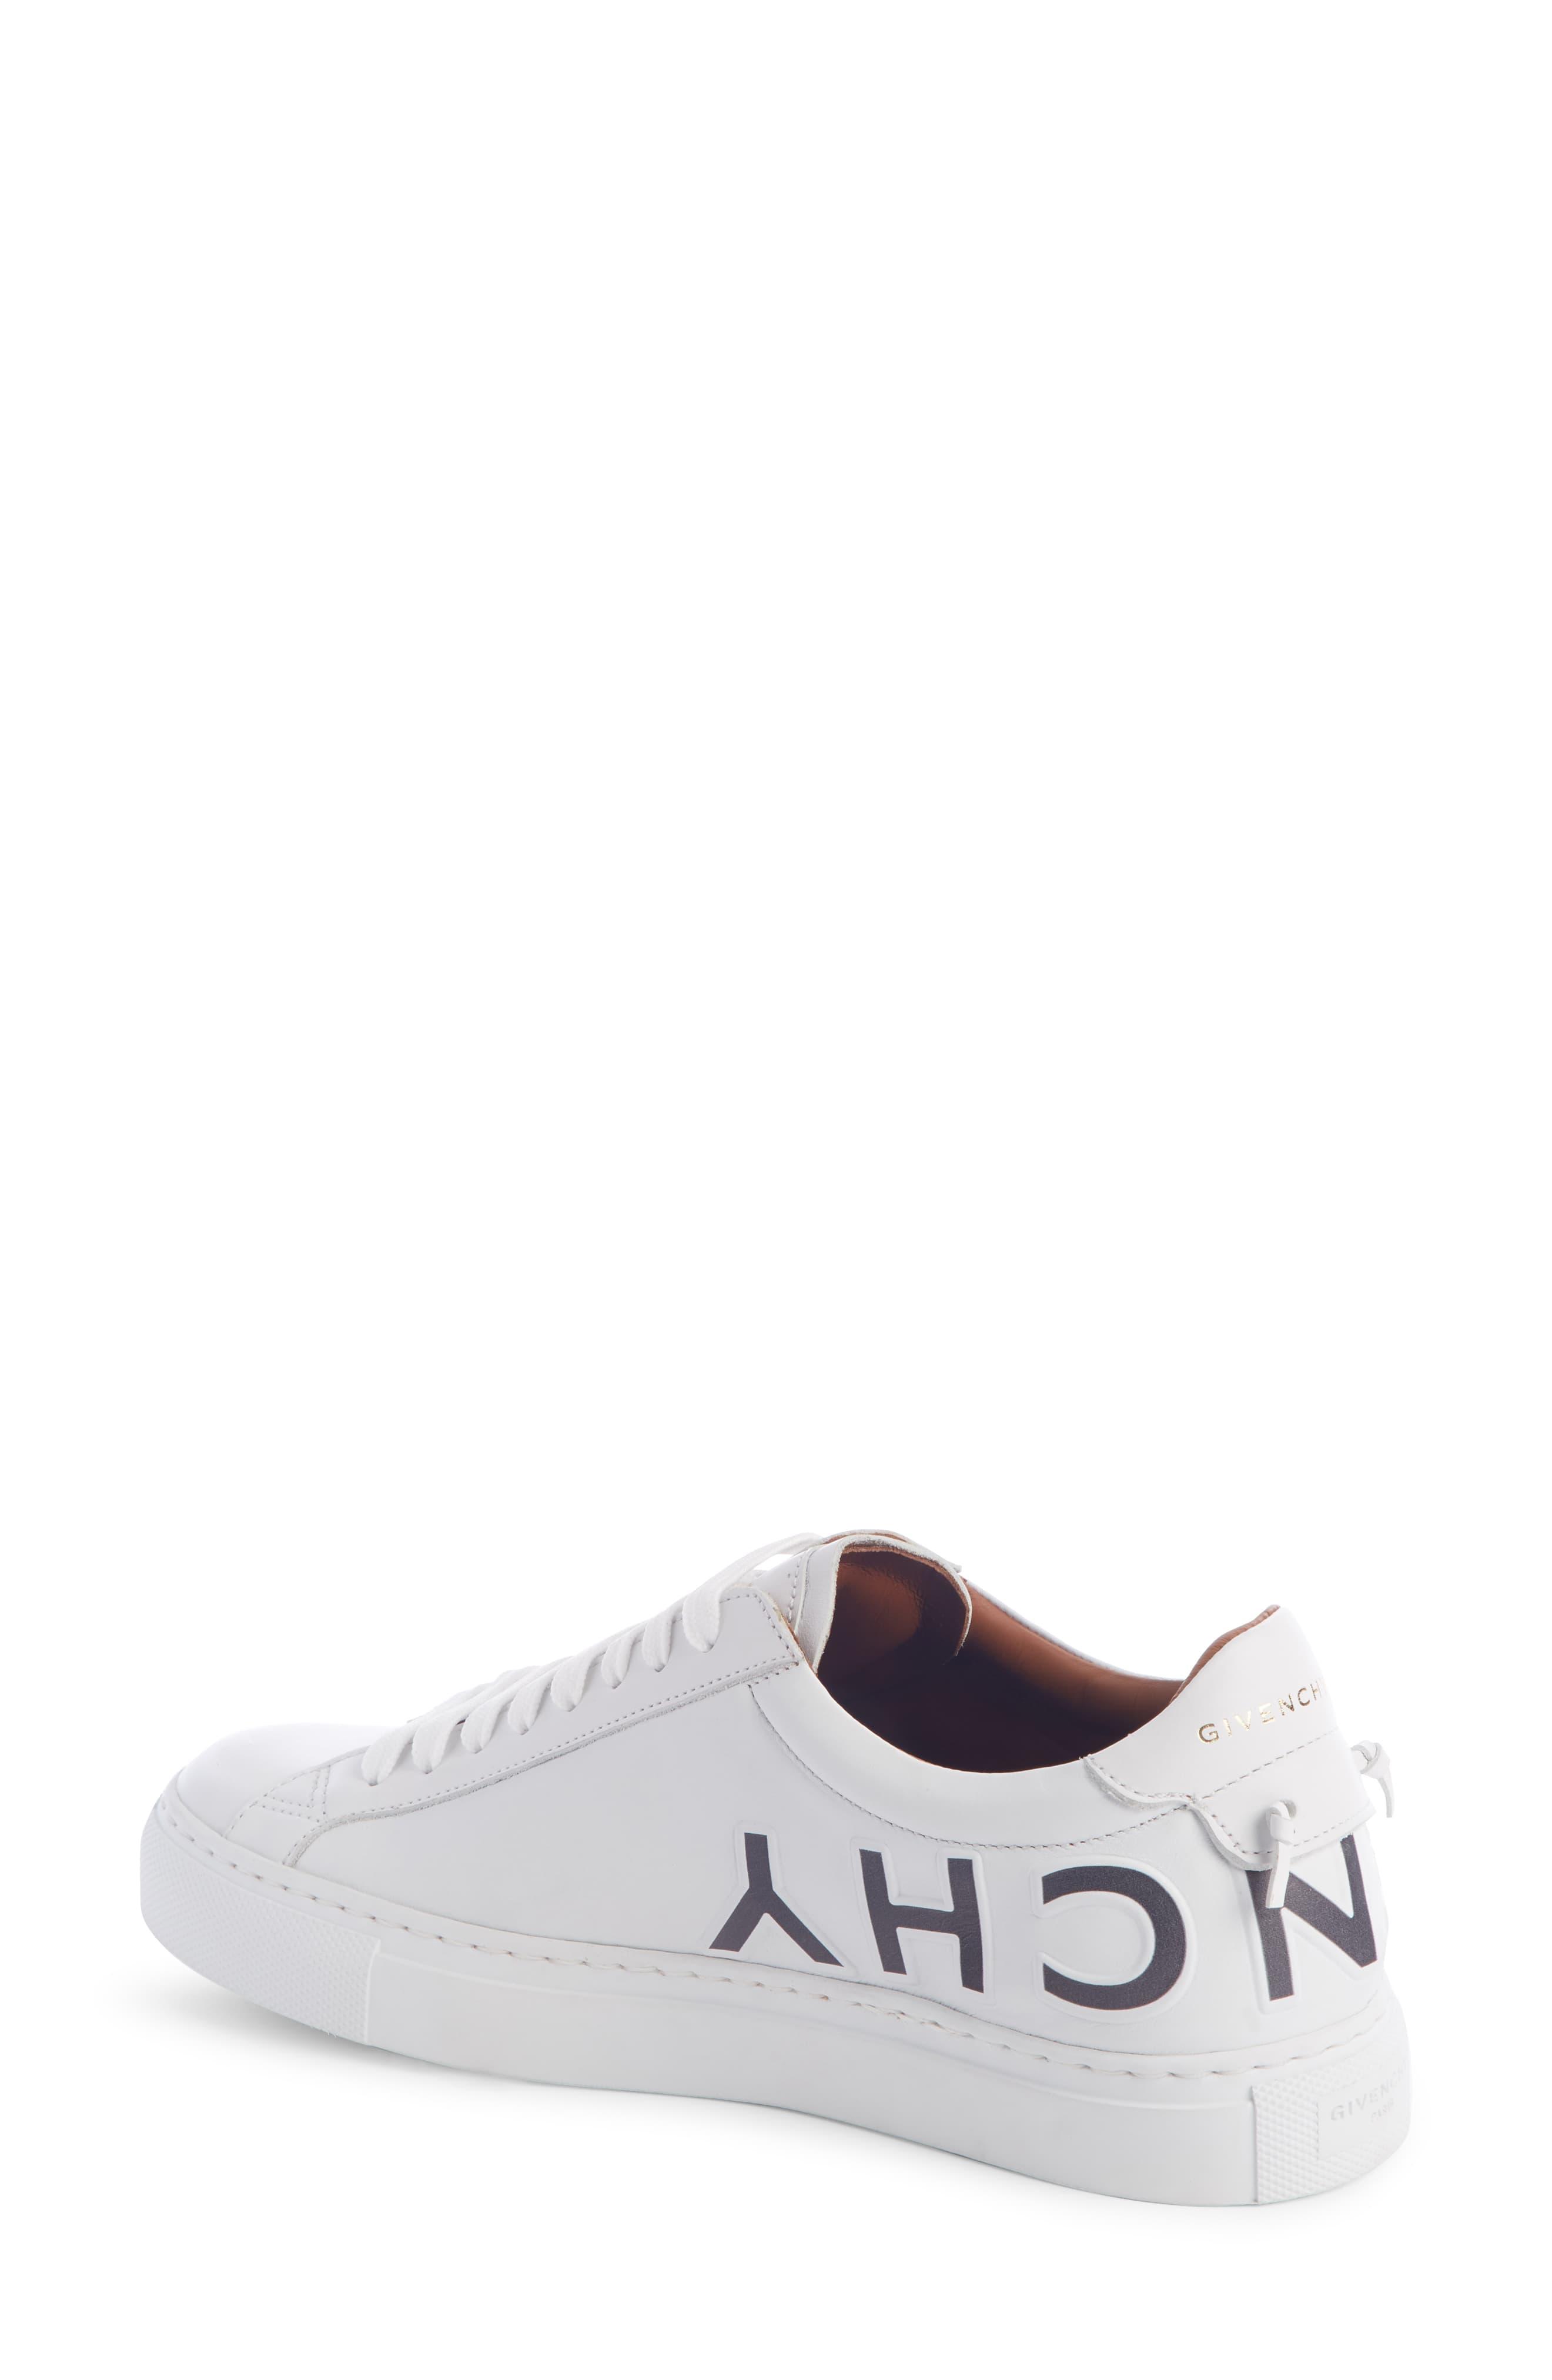 Givenchy Leather Urban Street Logo Sneaker in White/ Black (White) - Lyst